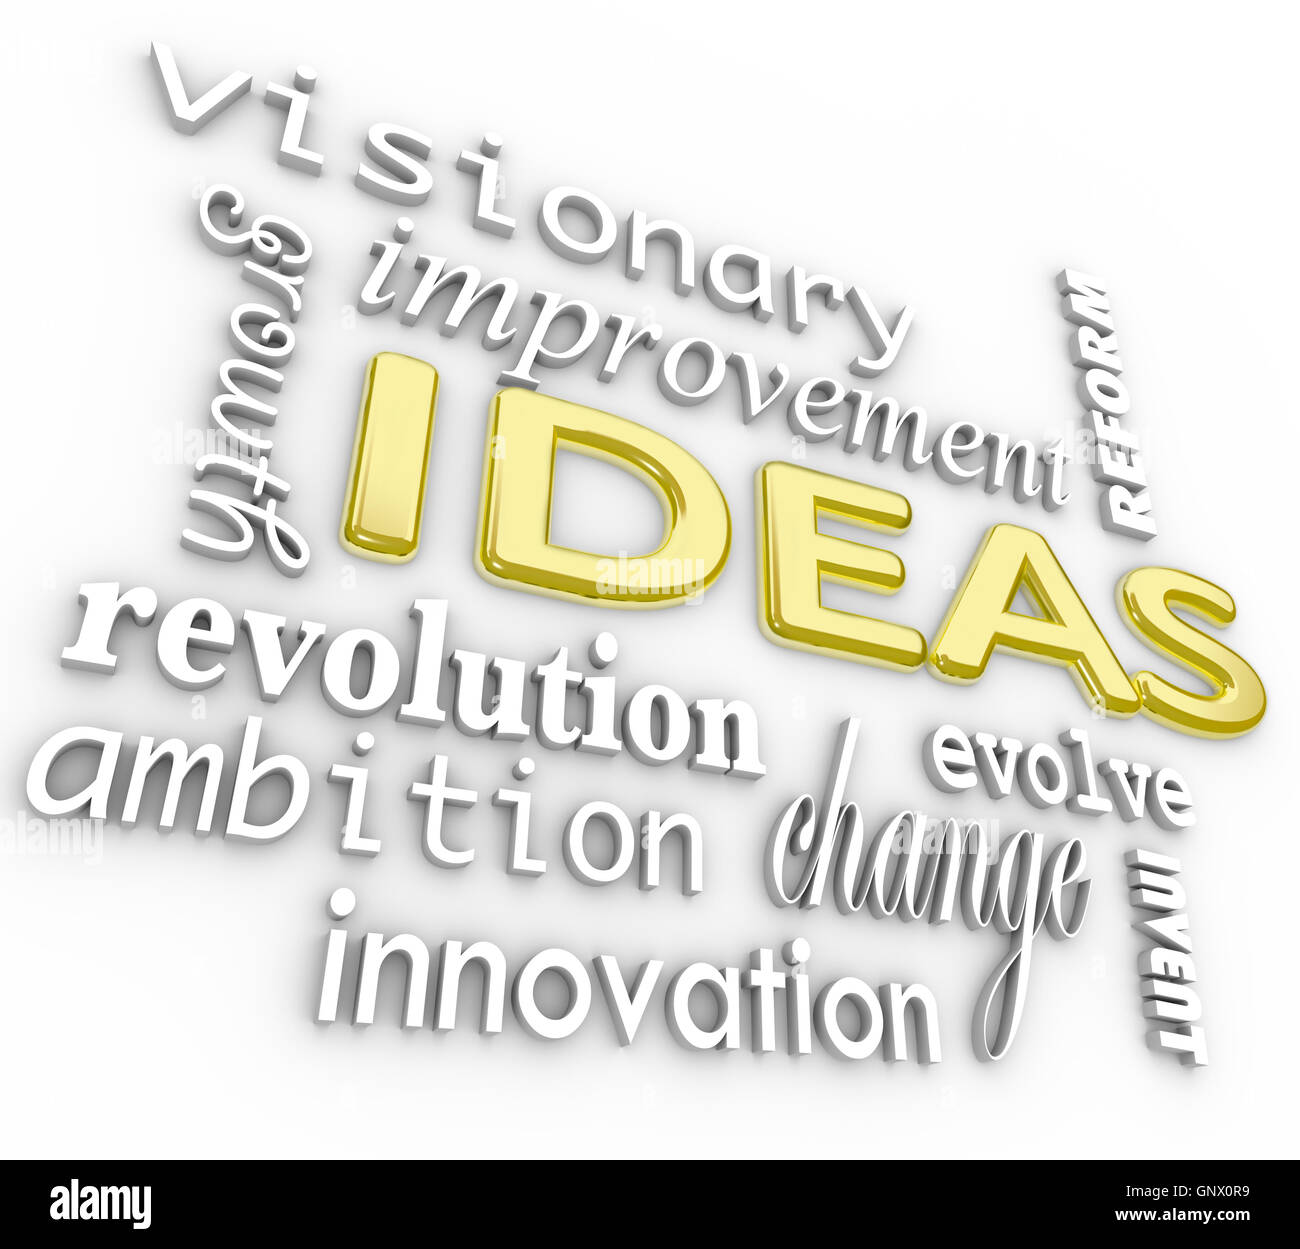 Ideen-Word-Hintergrund - Innovation Vision 3D Wörter Stockfoto